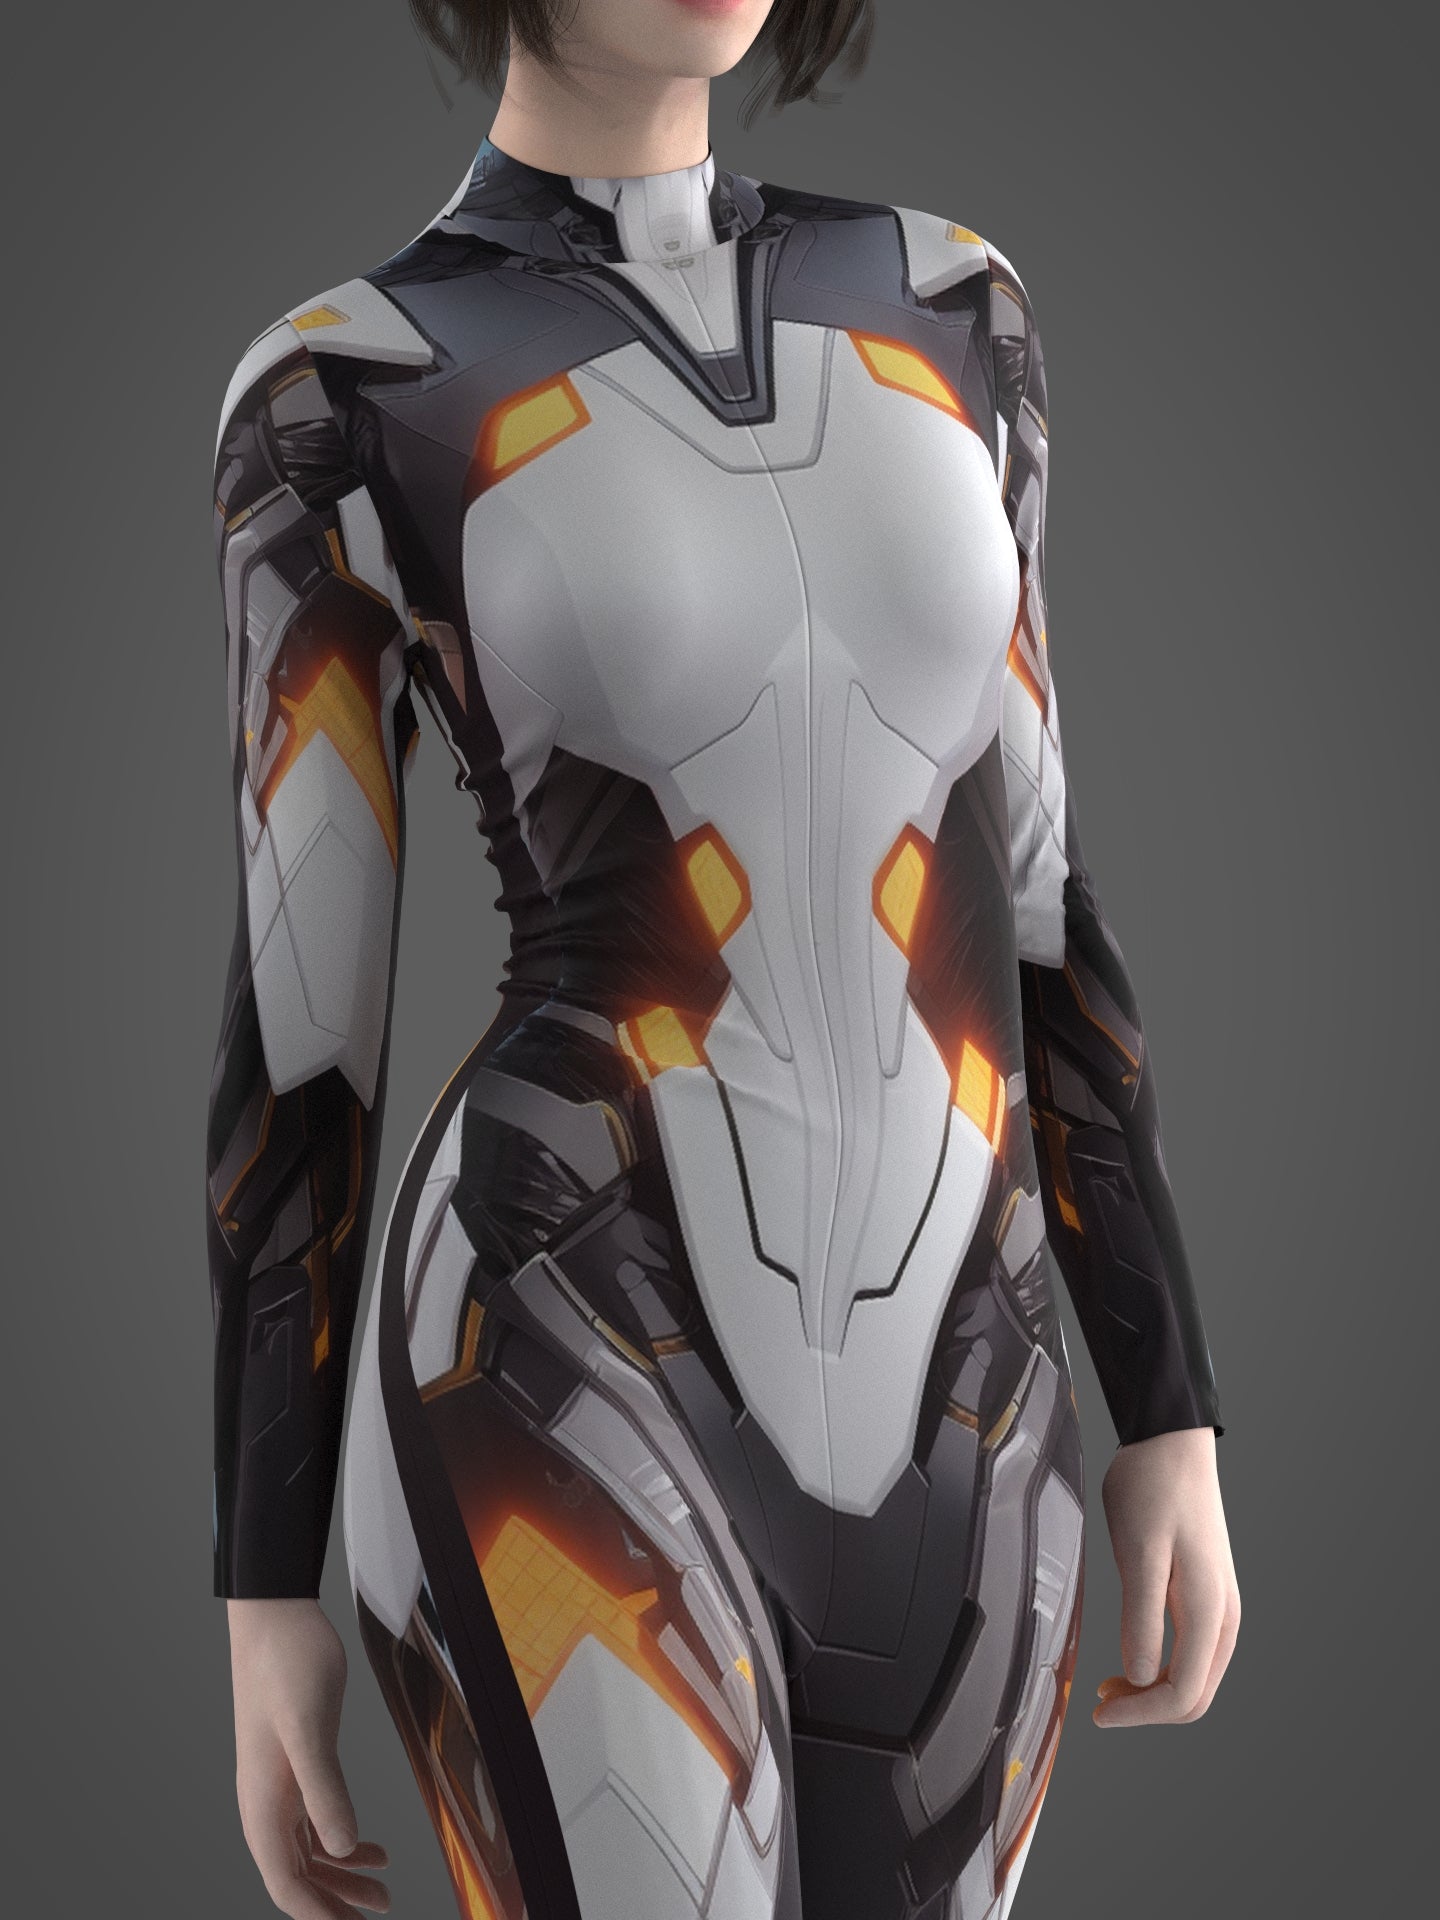 Cyberpunk Costume (Custom Fit Available), Robot Costume For Women, Spa –  Hautico Brand